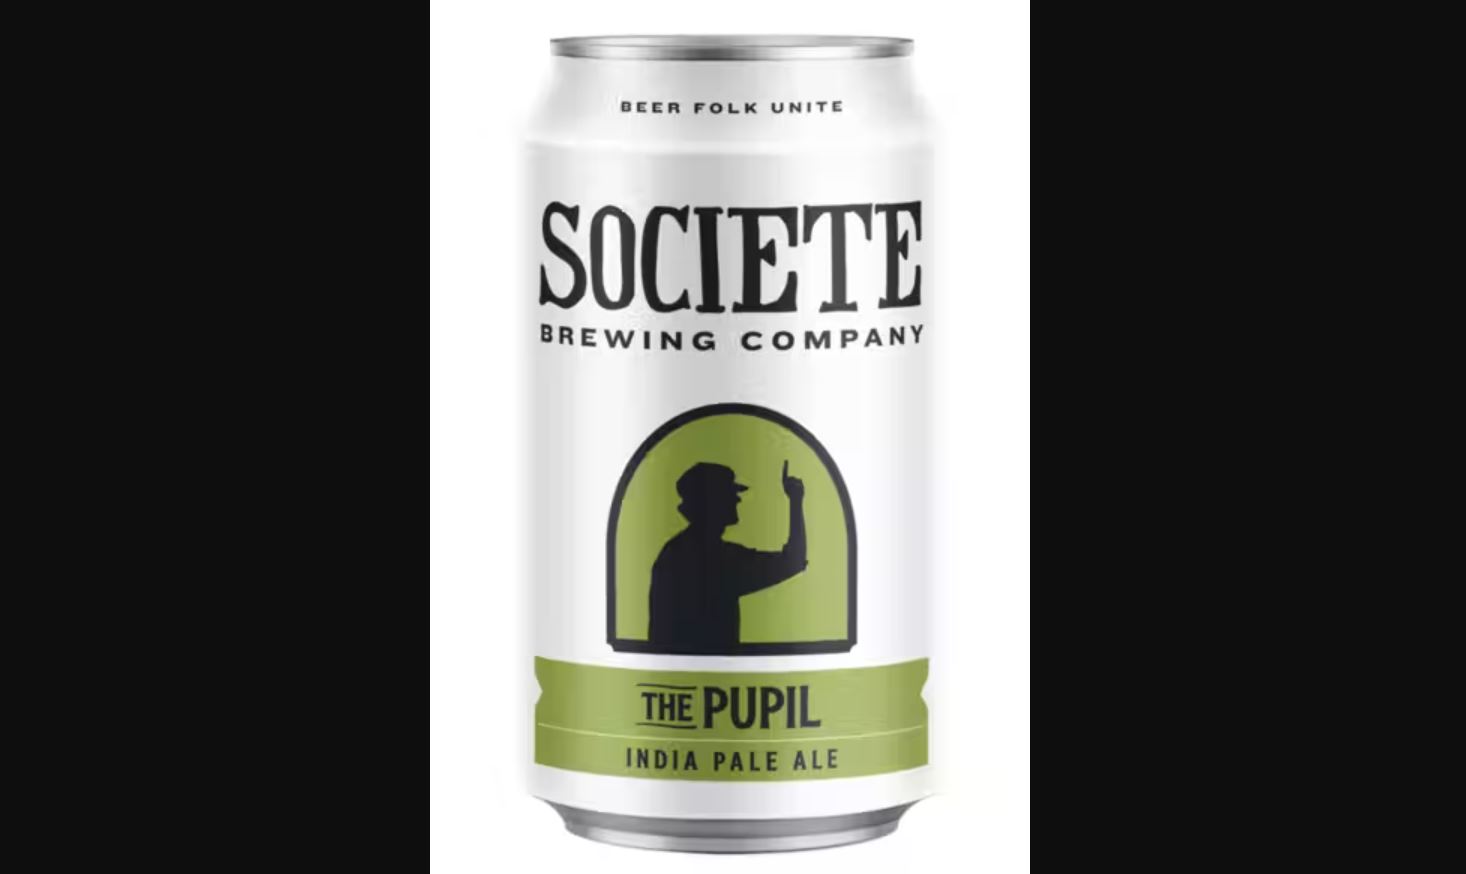 Societe The Pupil IPA